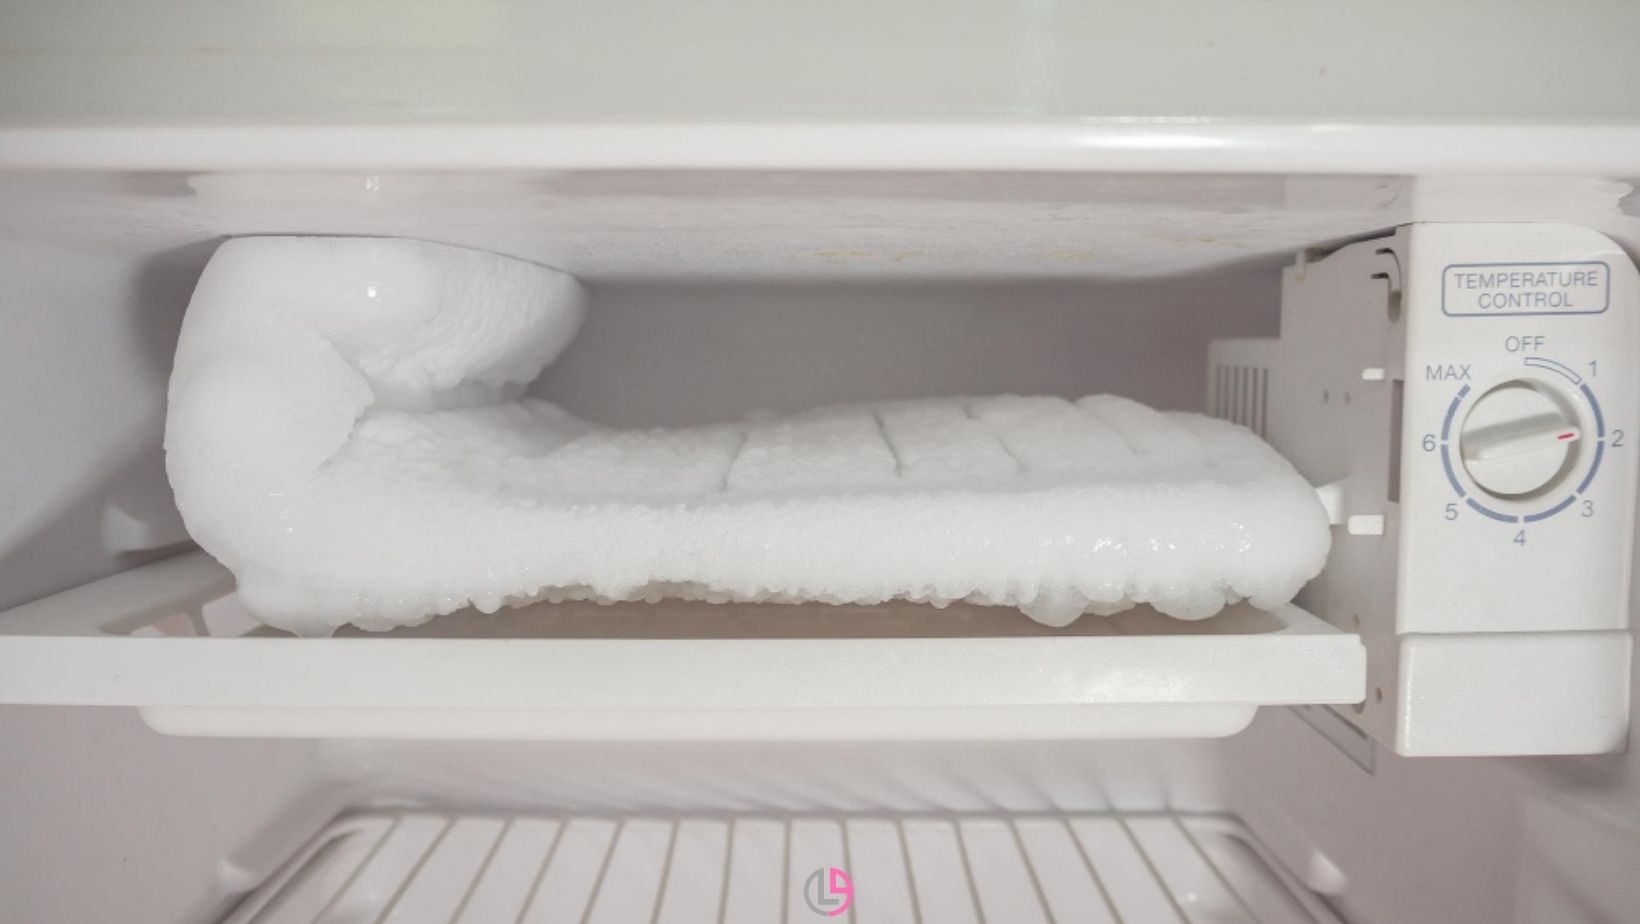 How Often Should You Defrost freezer